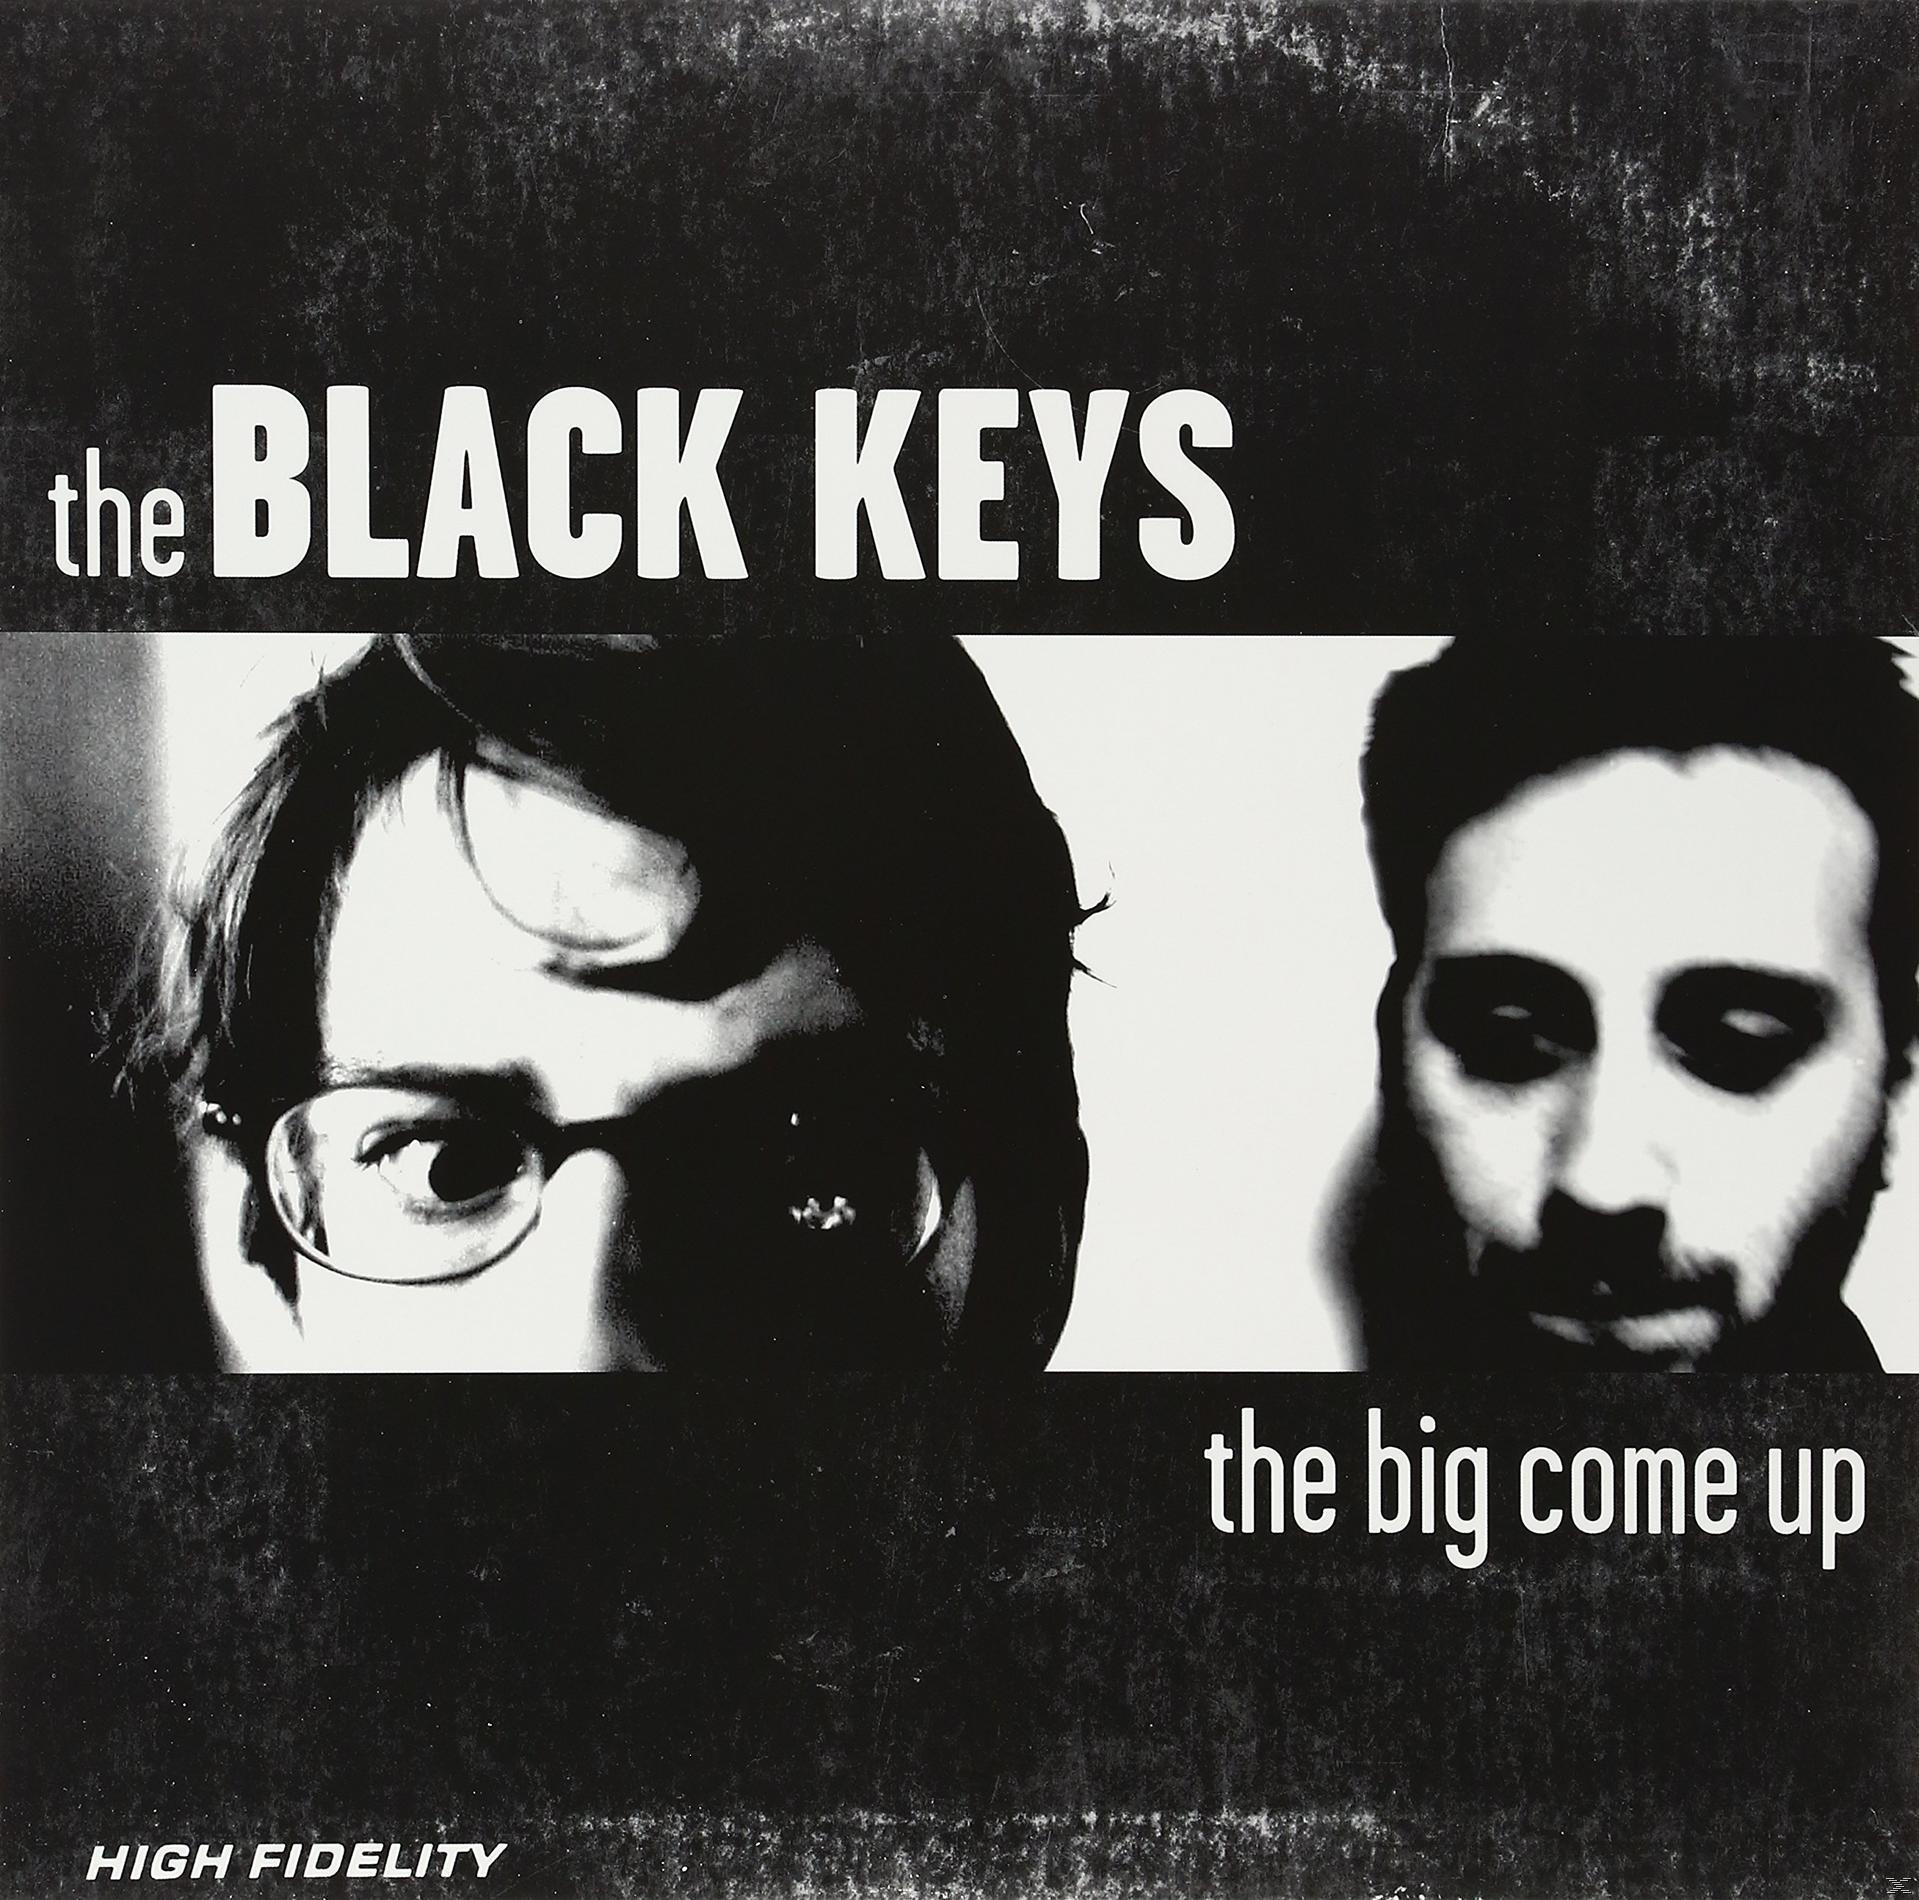 The Black Keys - The Up Big - (Vinyl) Come